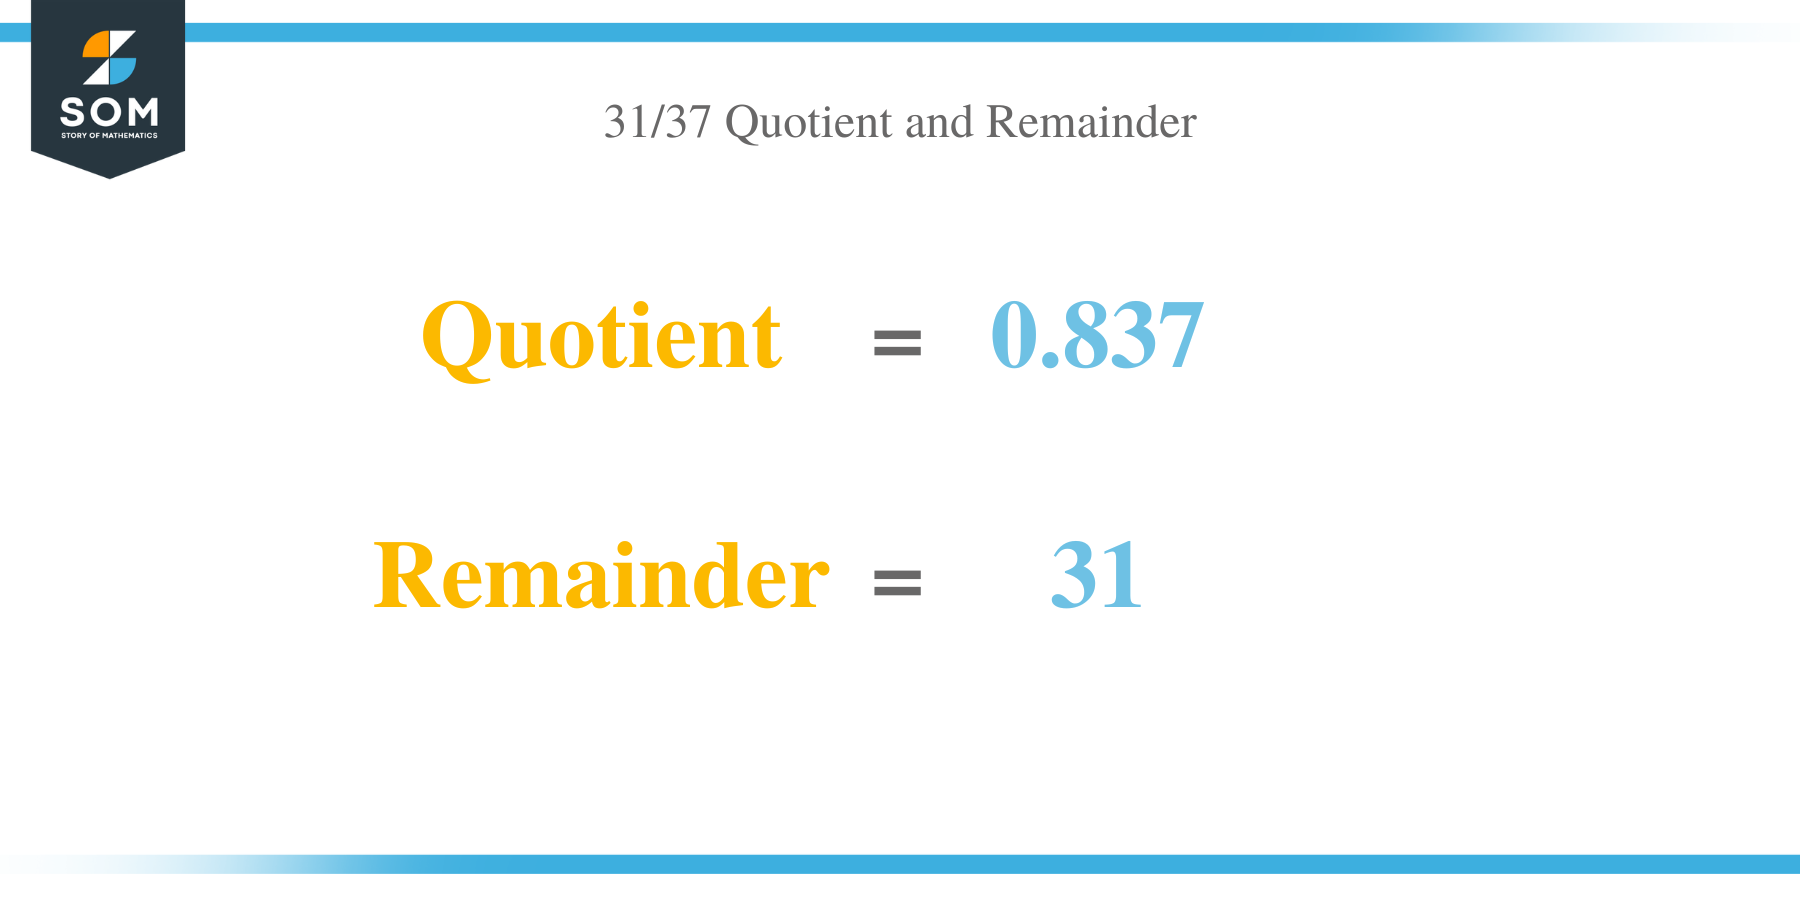 Quotient and Remainder of 31 per 37